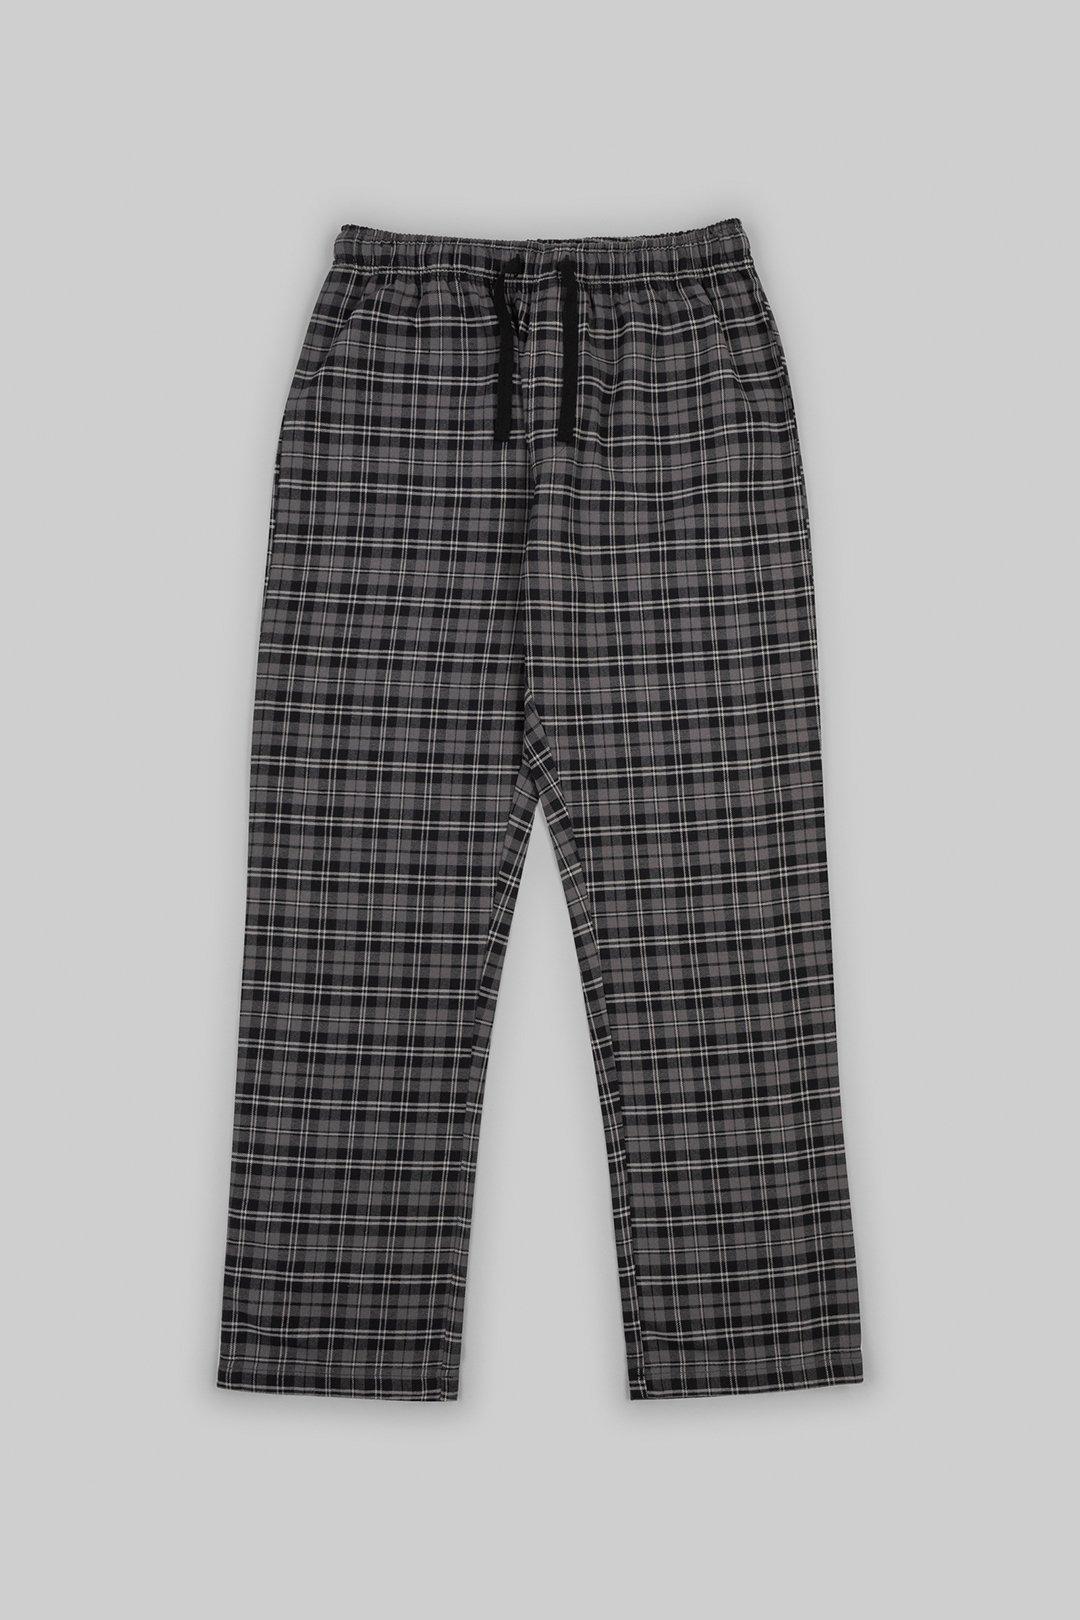 Black Check Cotton Pyjama Bottoms